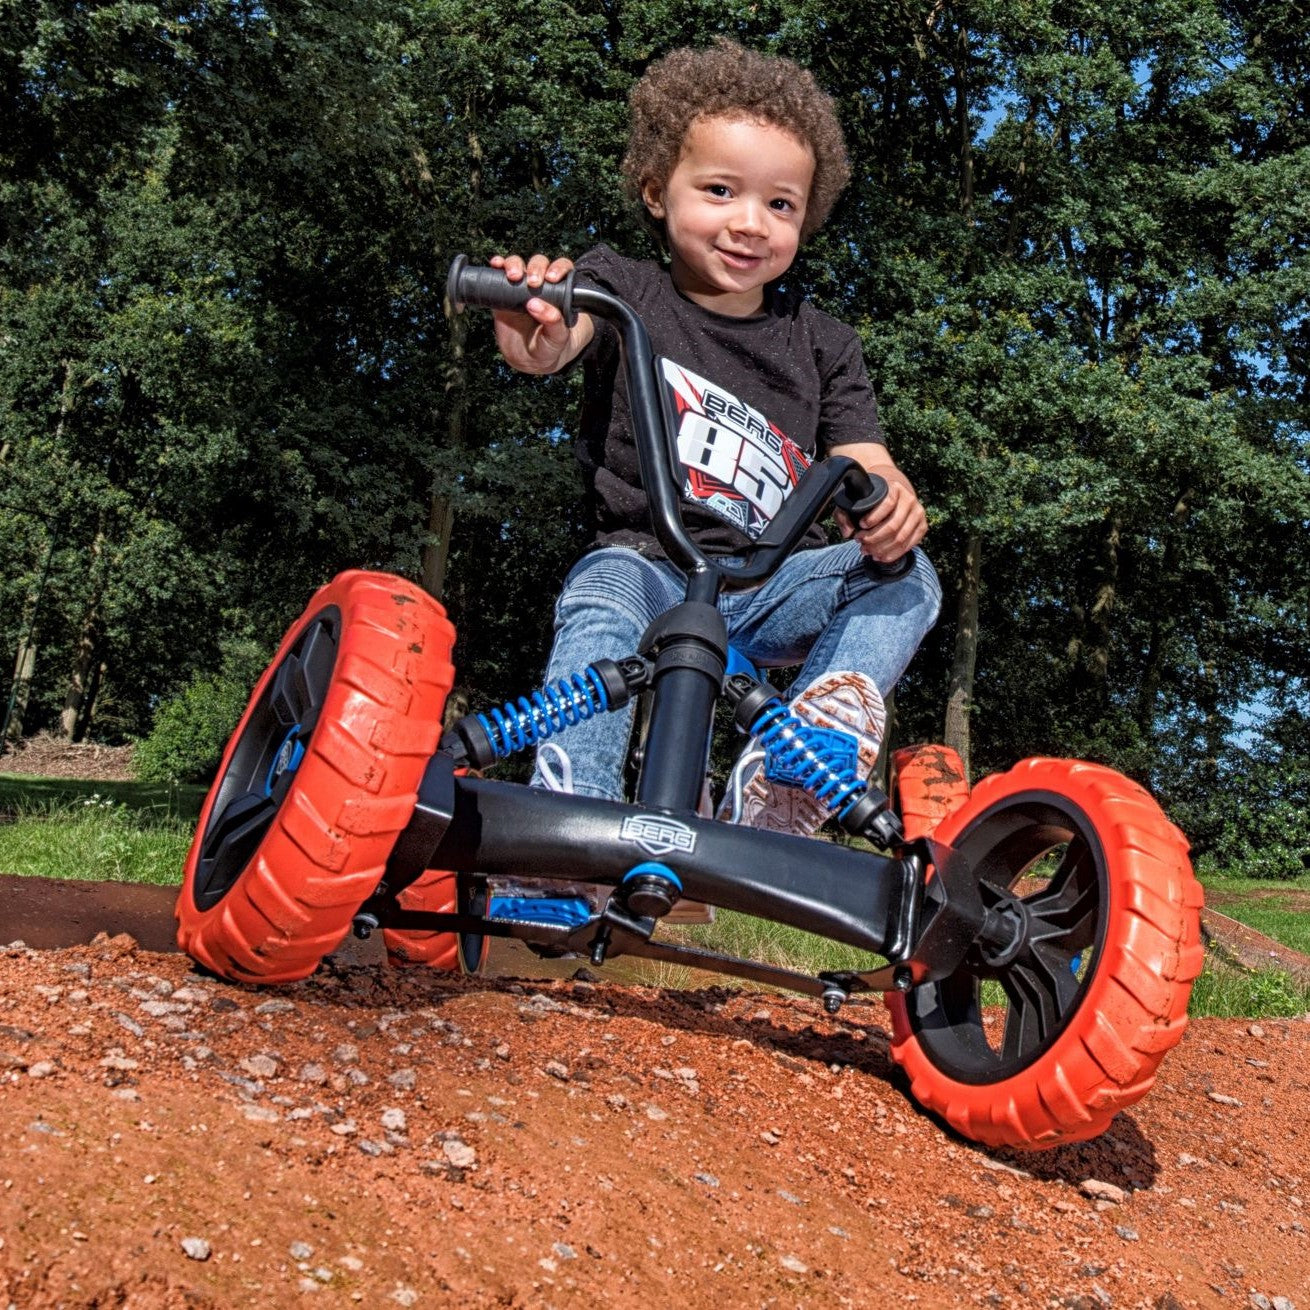 Boy riding Buzzy Nitro Go Kart